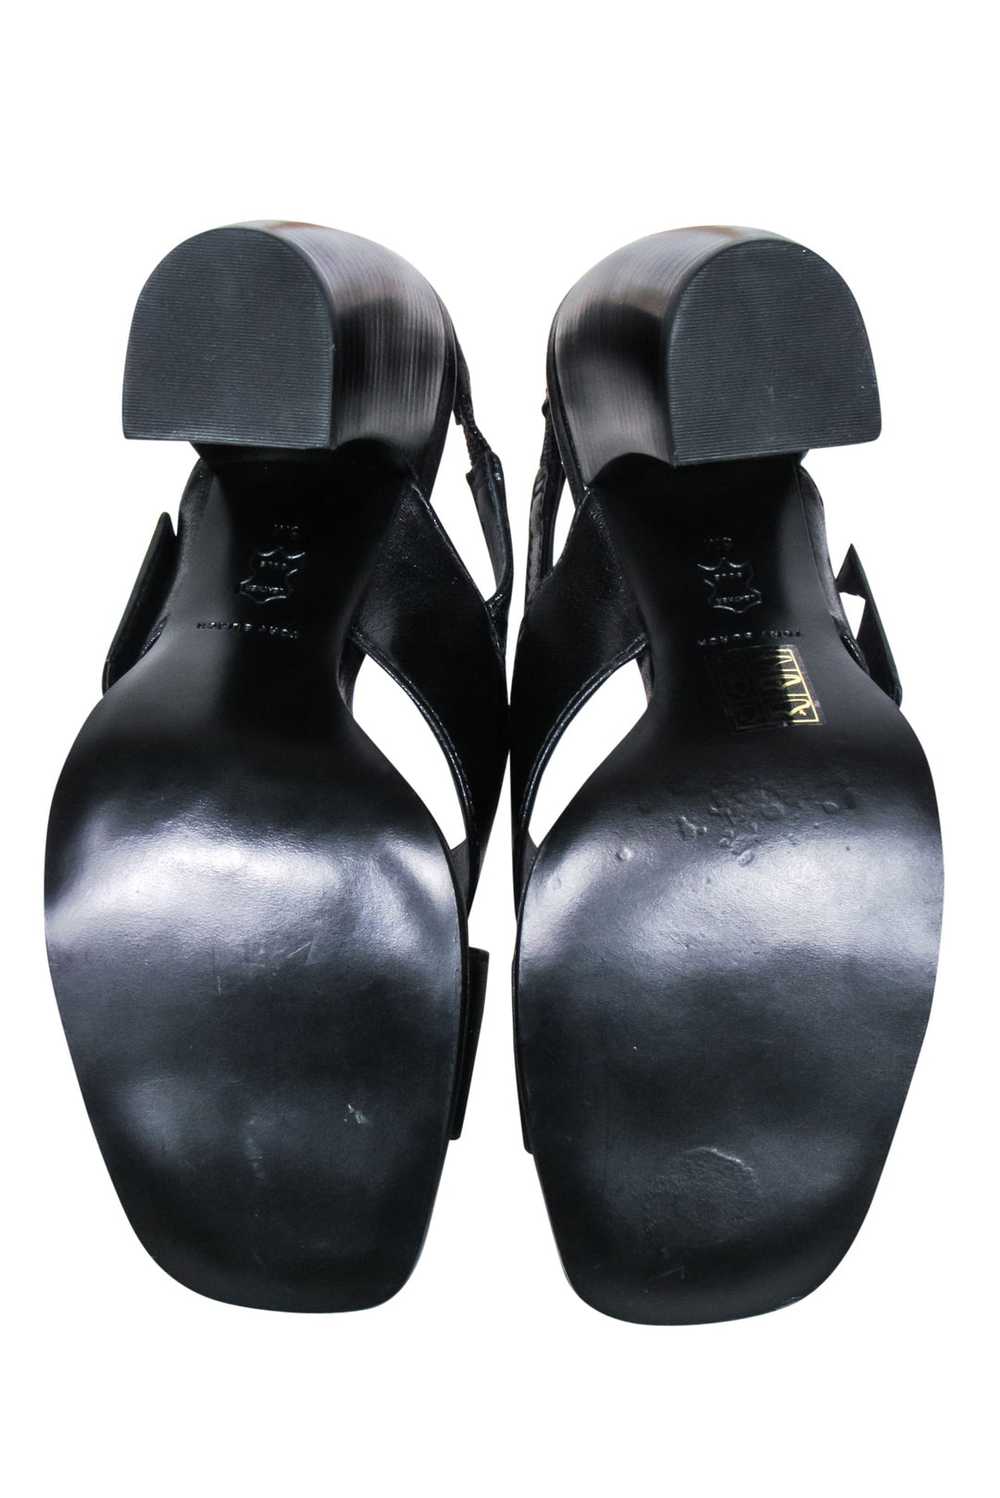 Tory Burch - Black Leather Crisscross Banana Heel… - image 5